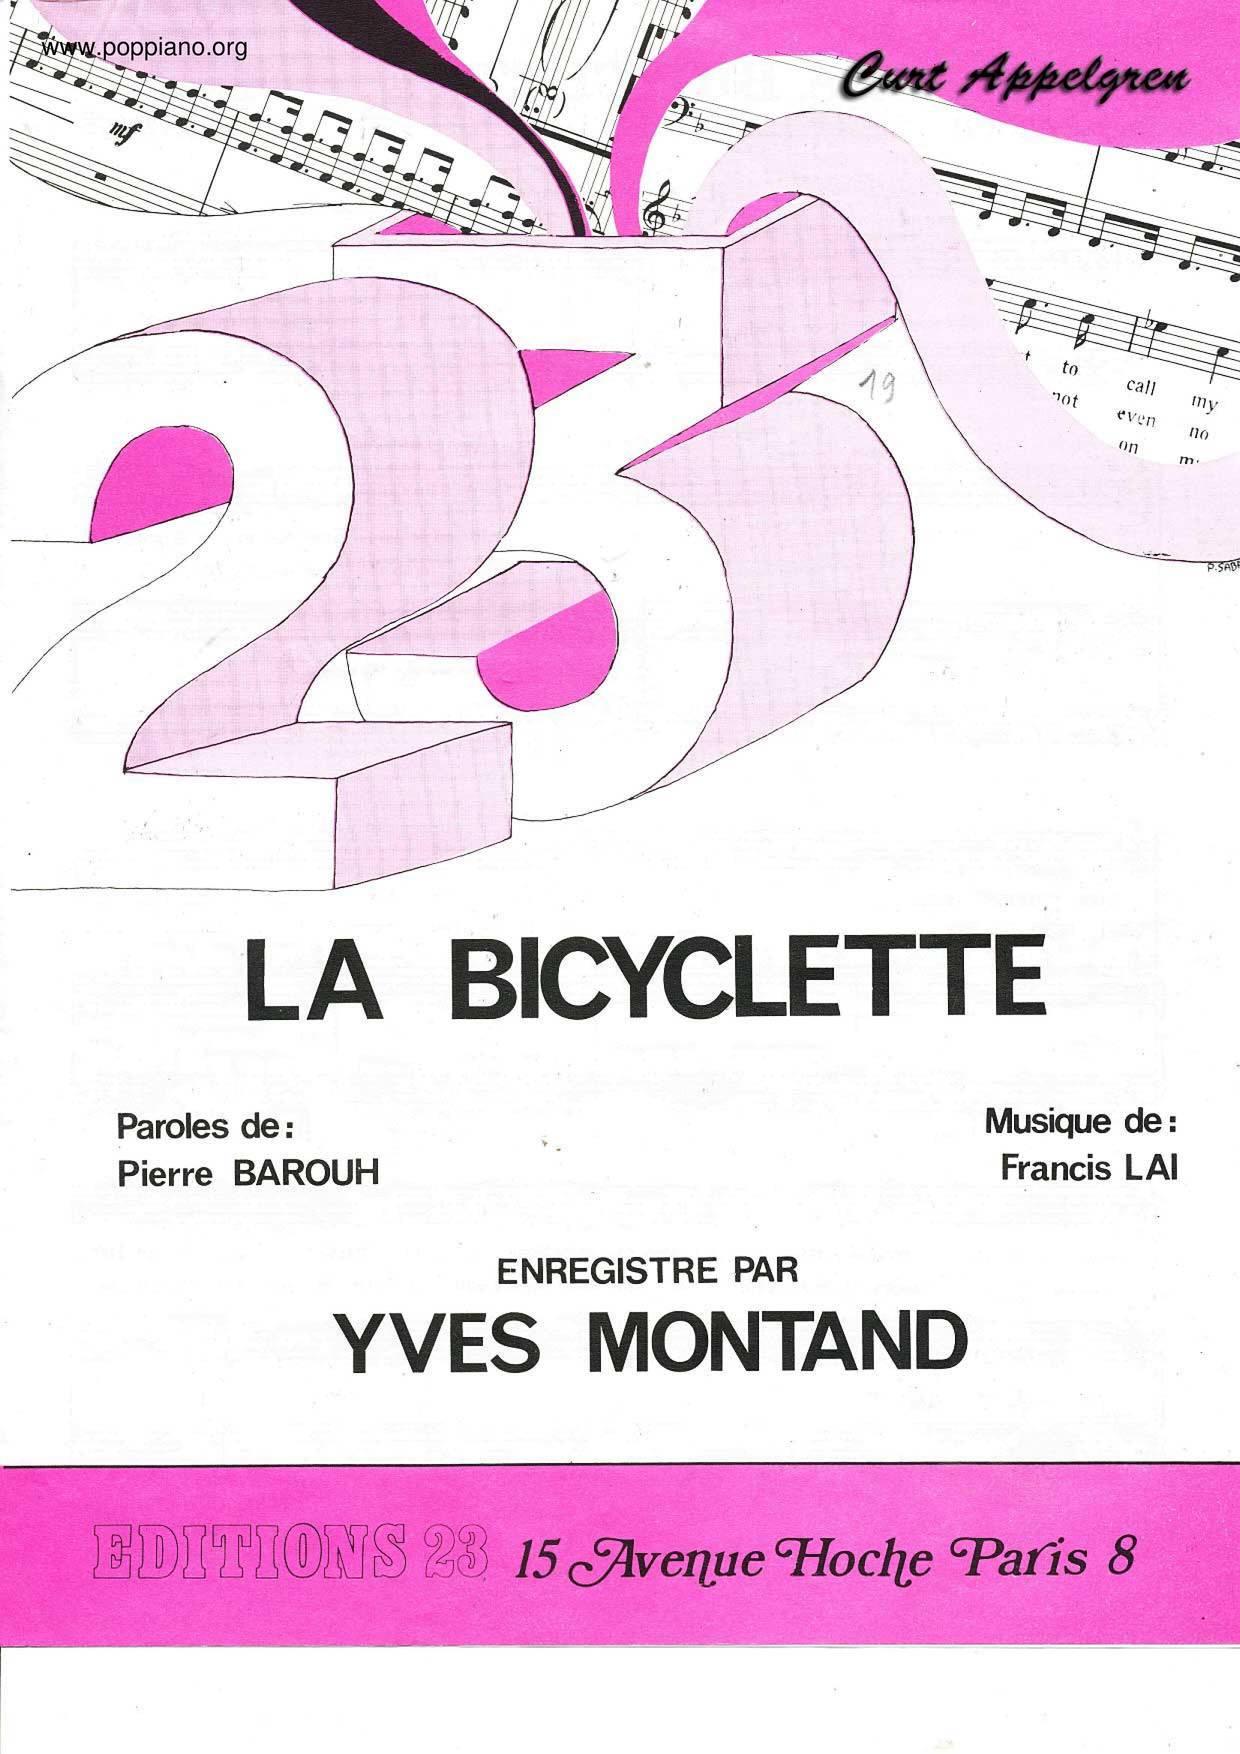 La Bicyclette Score